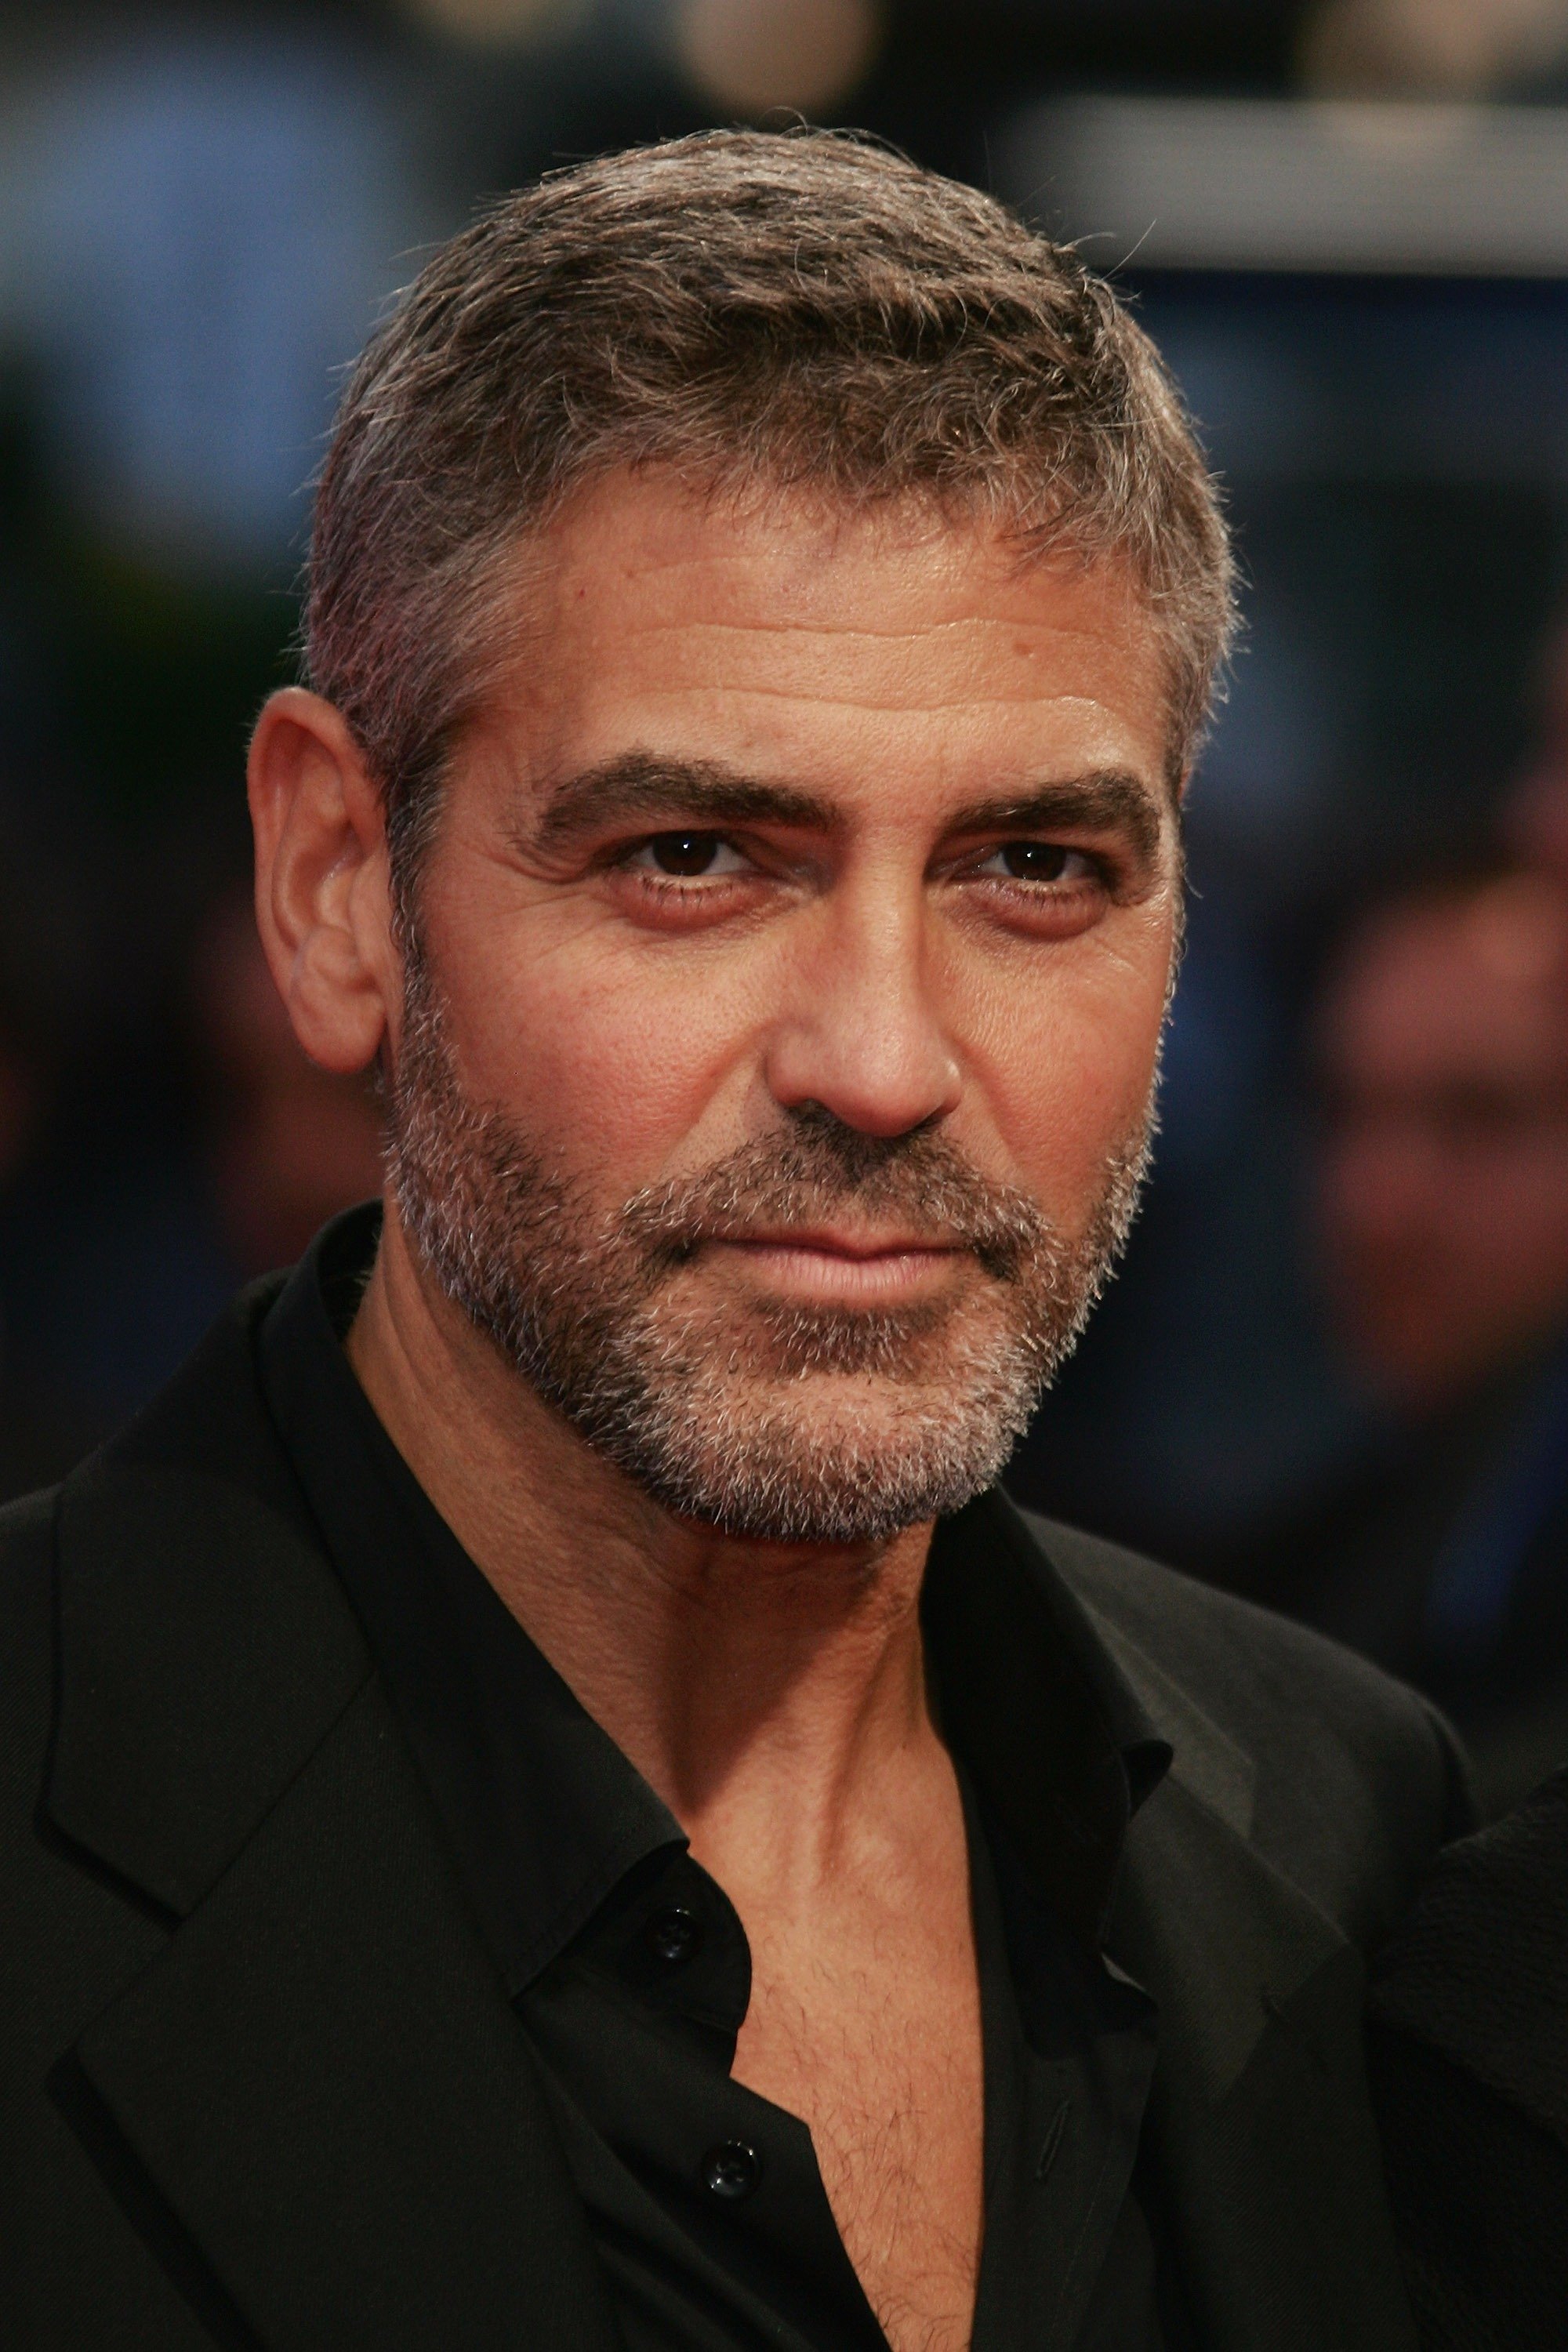 George Clooney, Premiere von "Michael Clayton", 2007 | Quelle: Getty Images